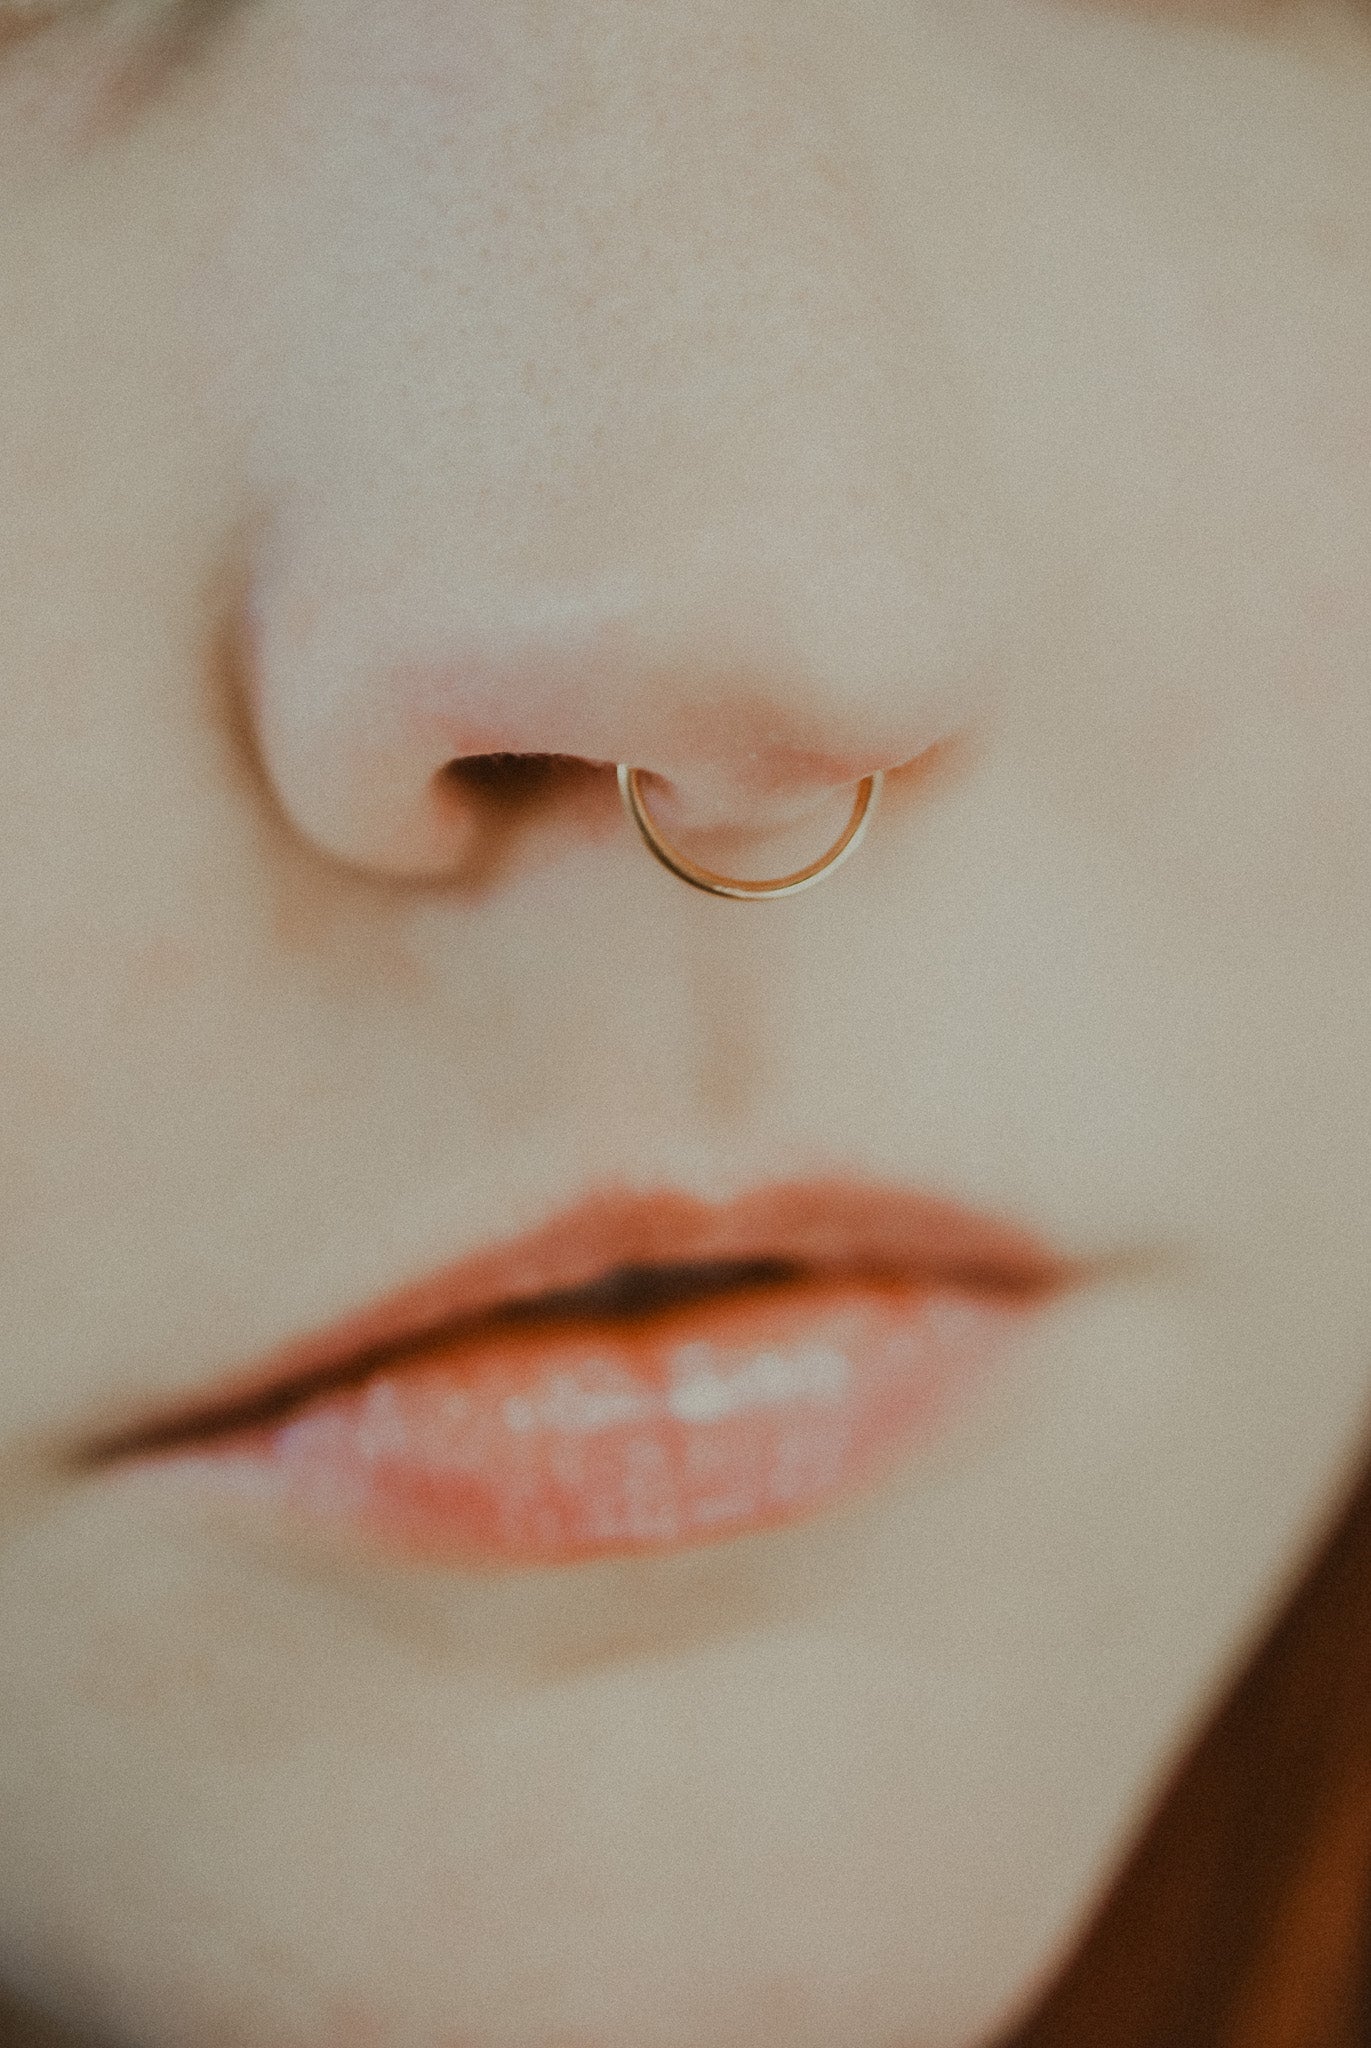 nose piercing jewelry